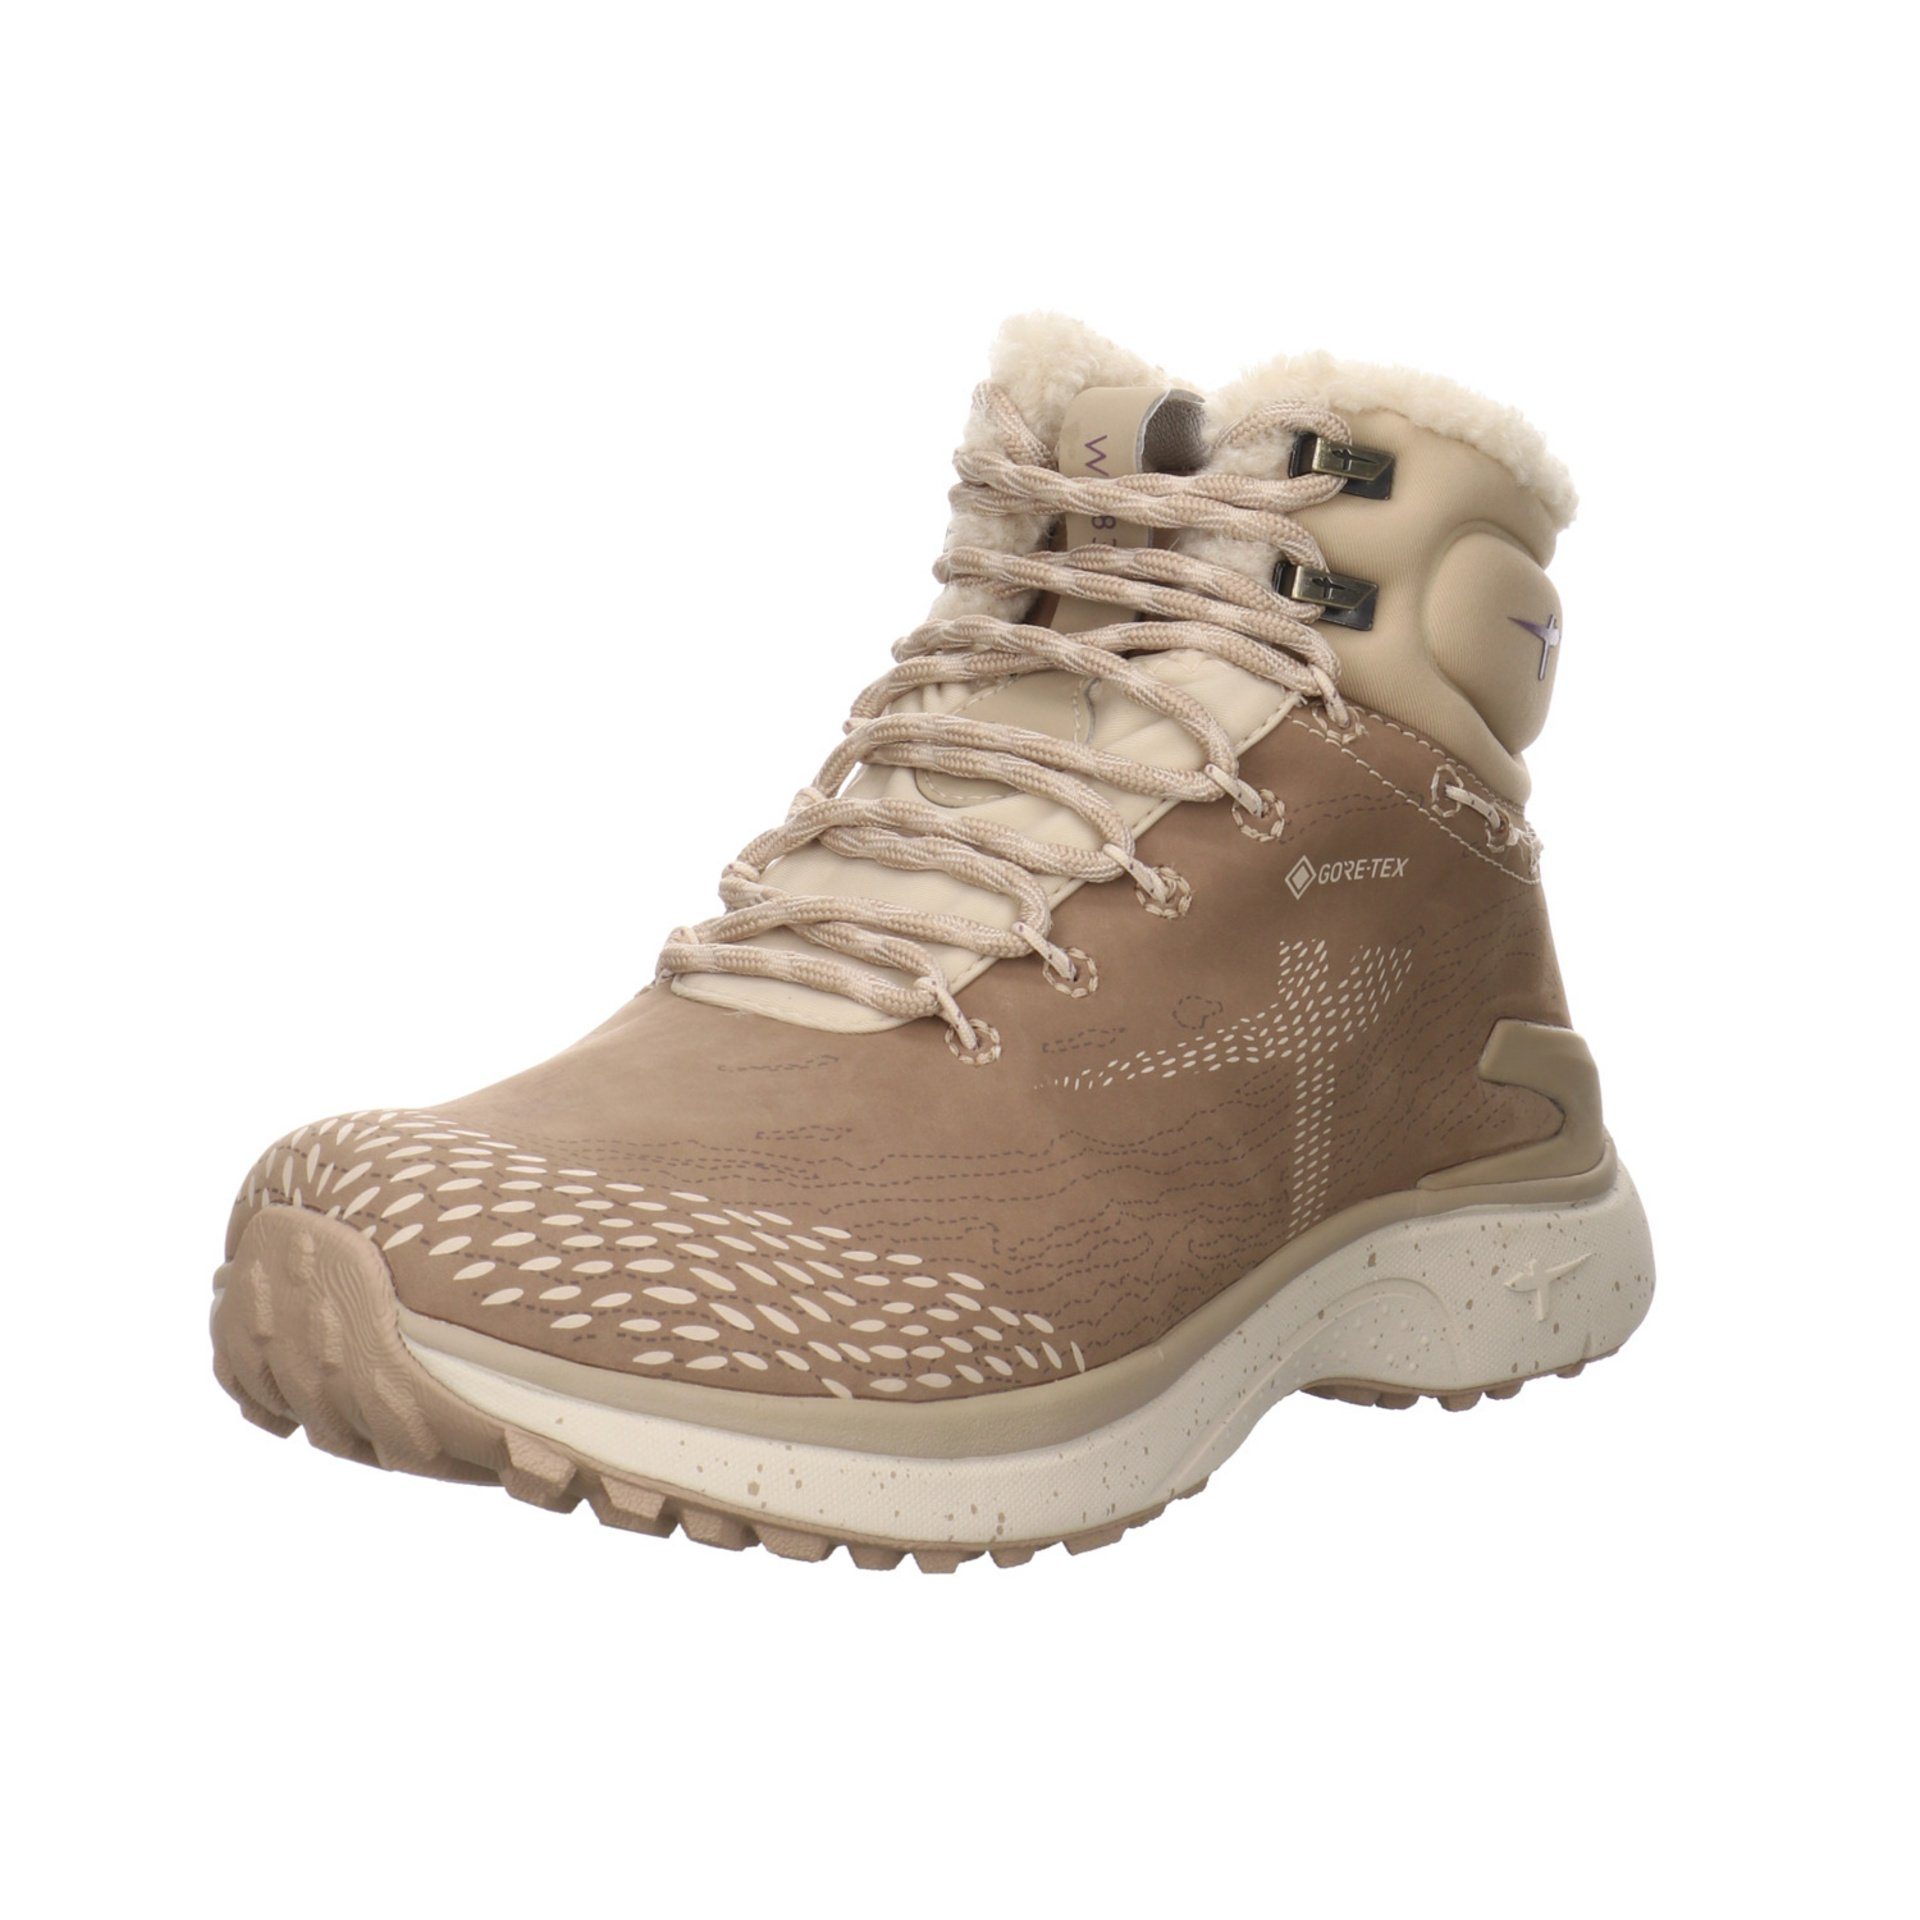 Tamaris Damen Schuhe Outdoor Gore-Tex Outdoorschuh Outdoorschuh Leder-/Textilkombination beige dunkel